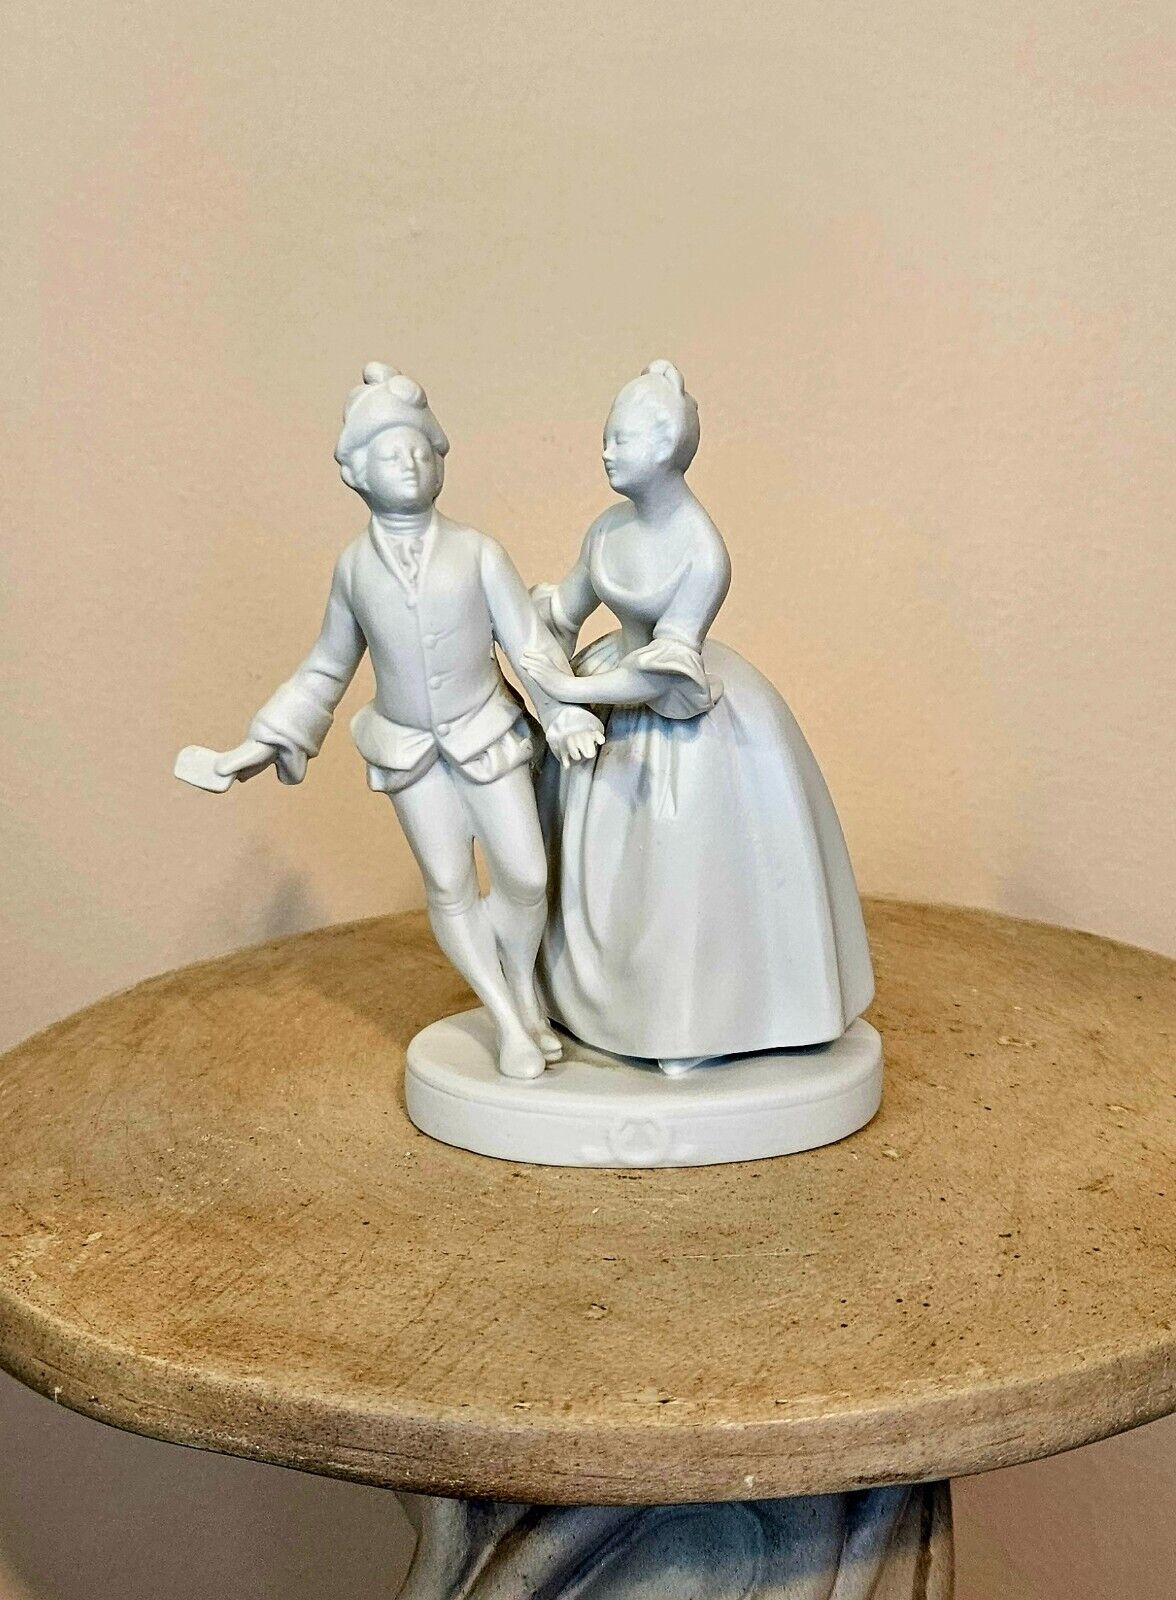 Gerold Porzellan Bavaria porcelain figurine Biscuit. Germany 1950s.